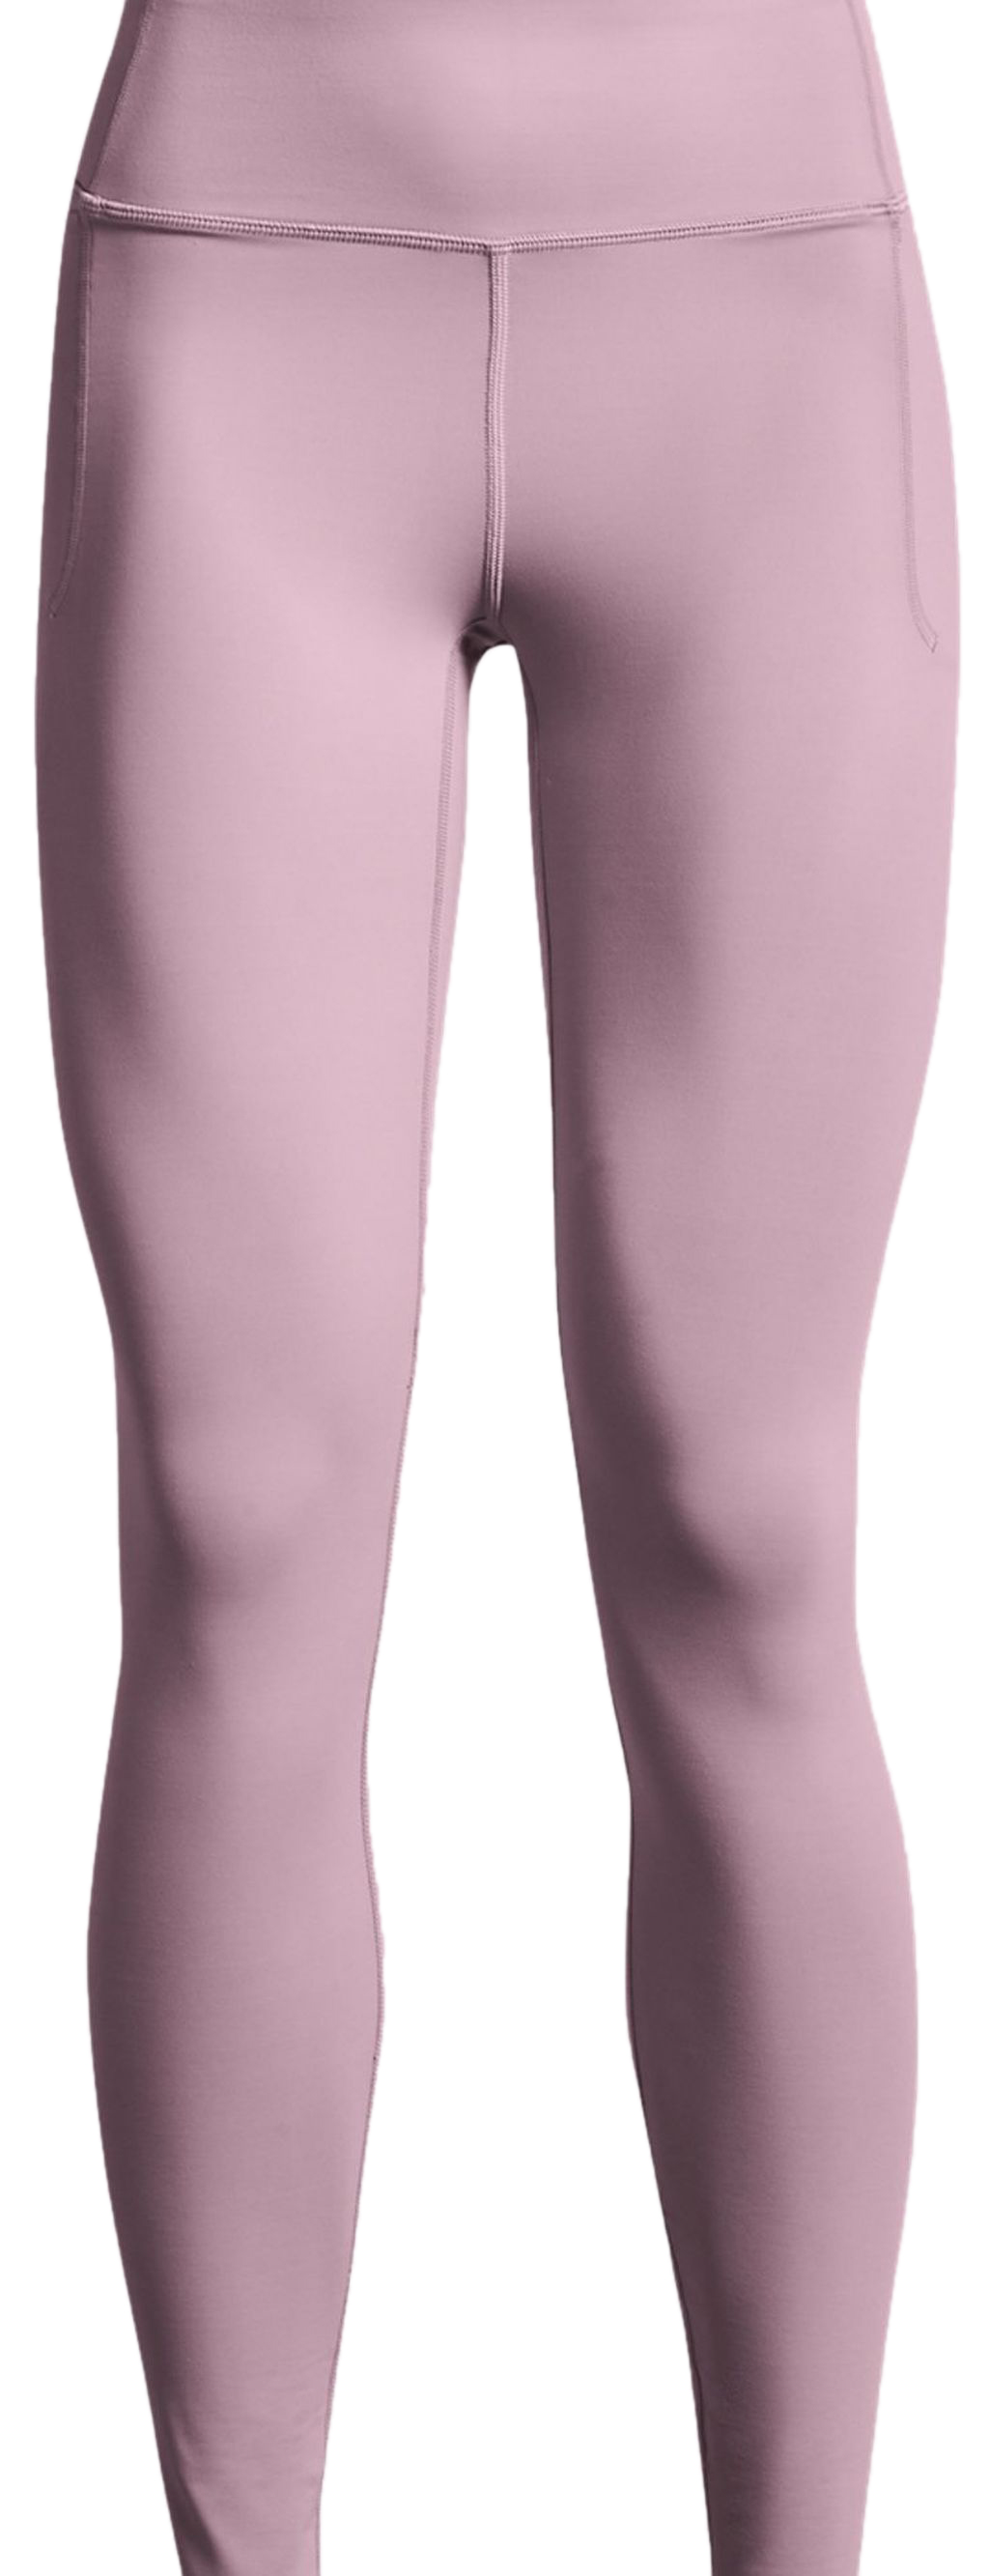 Women's leggings Under Armour Women's UA Meridian Leggings - mauve  pink/metallic silver, Tennis Zone